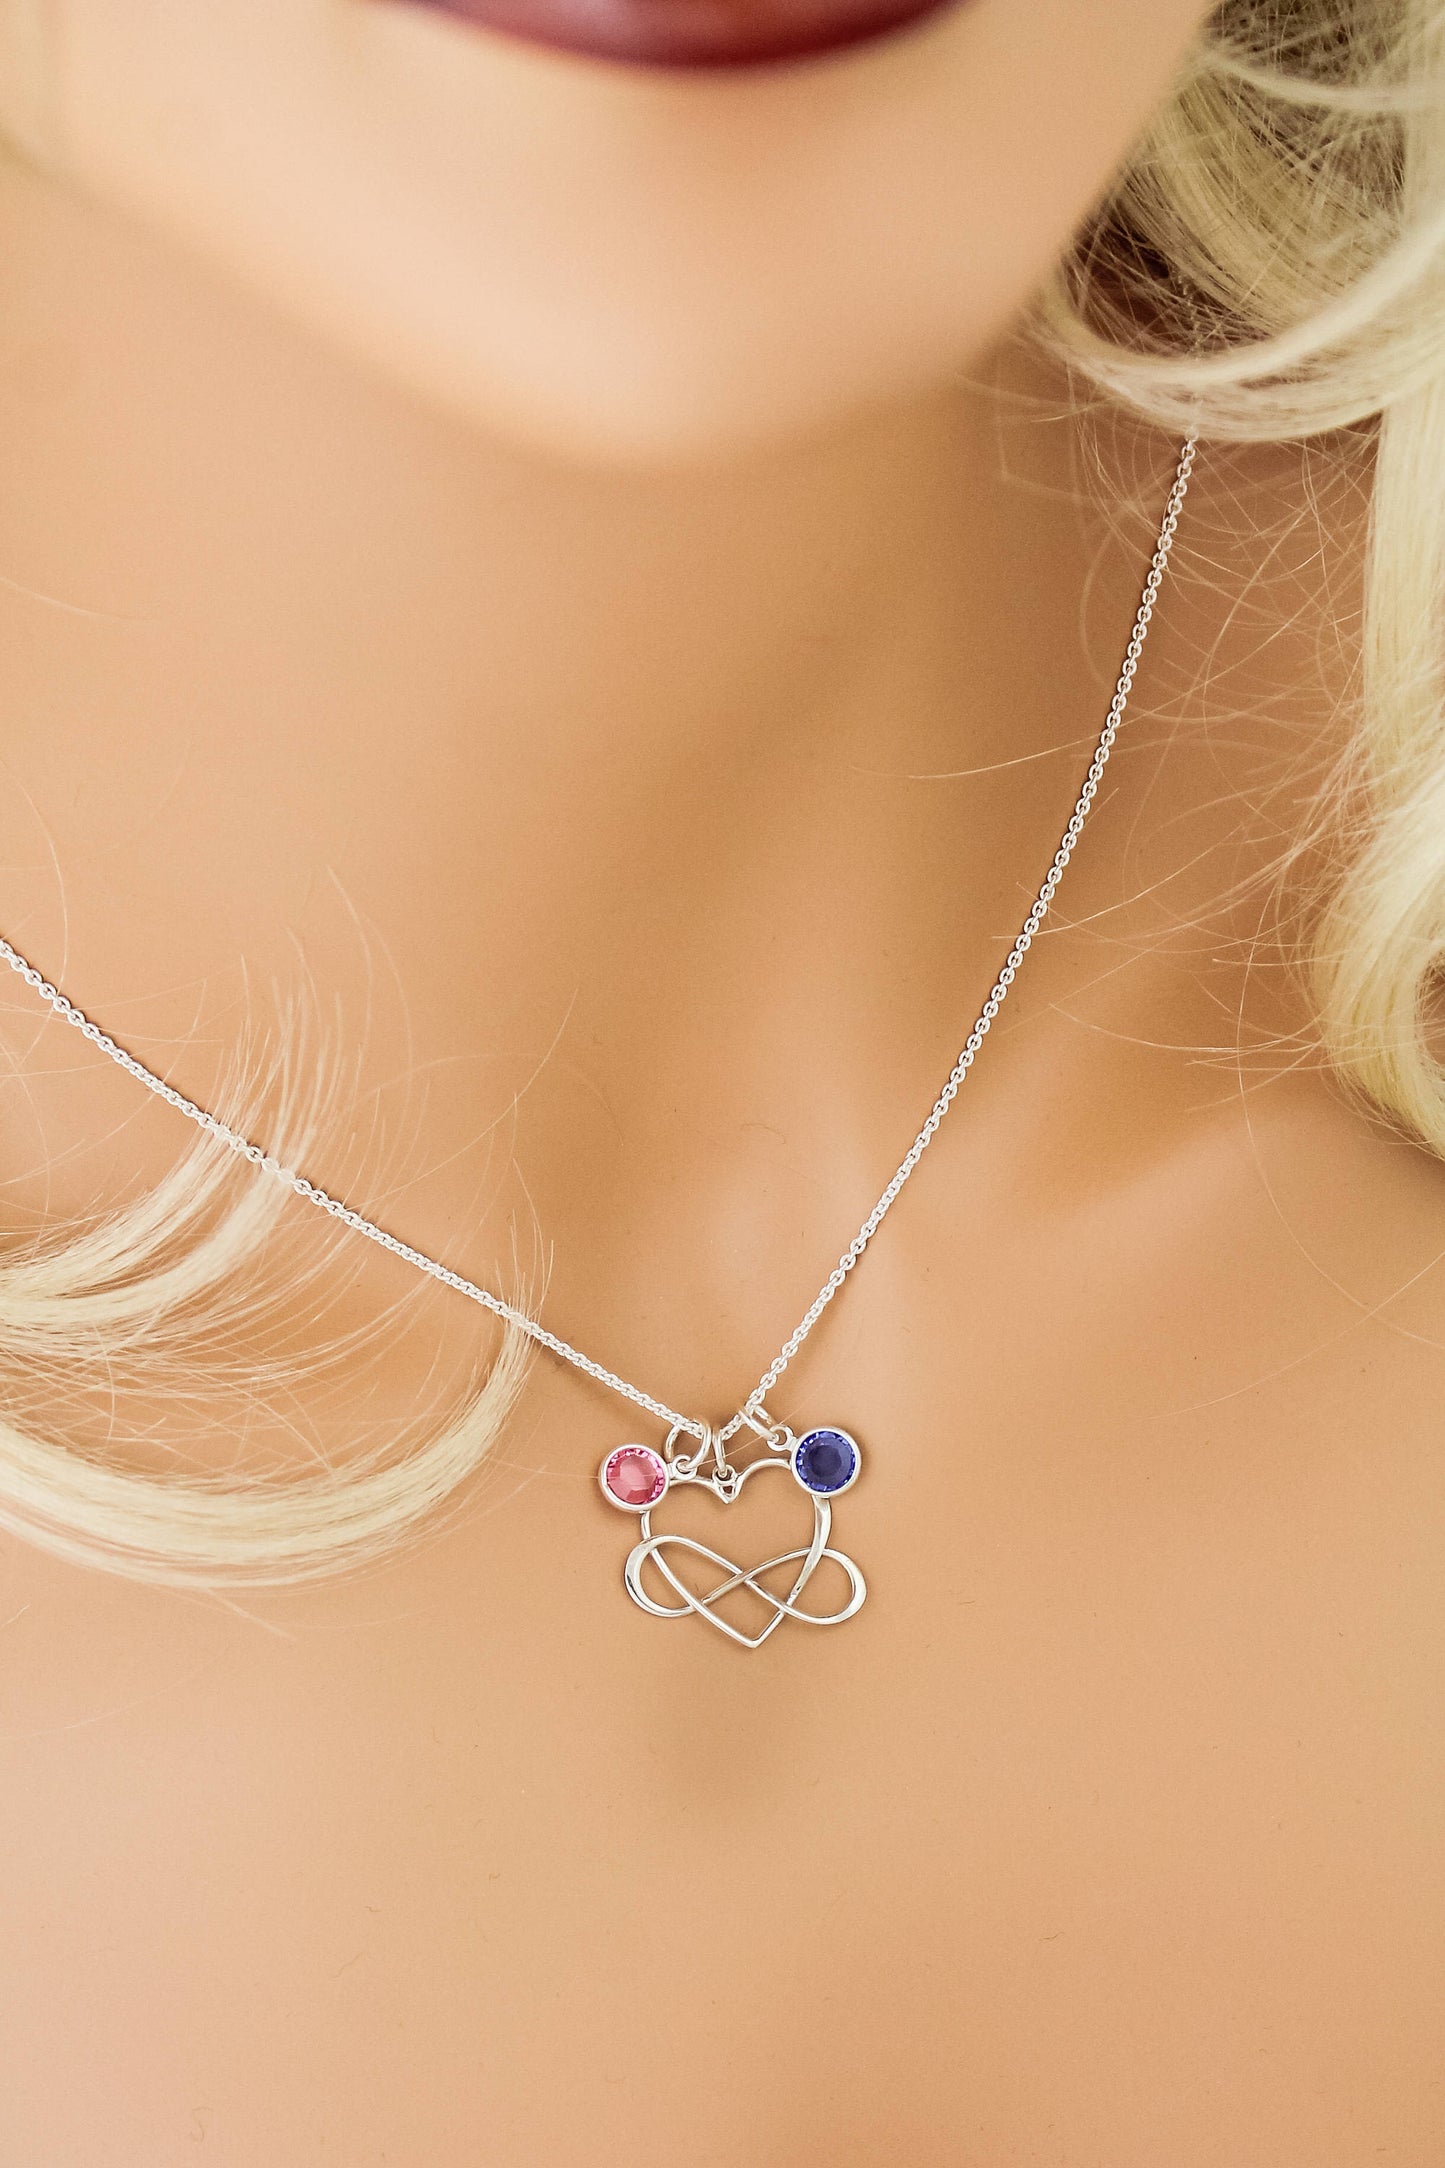 Infinite Heart Necklace with Birthstones, Heart Jewelry, Birthstone Necklace, Personalized Jewelry, Grandchildren Birthstones, Gifts for Her